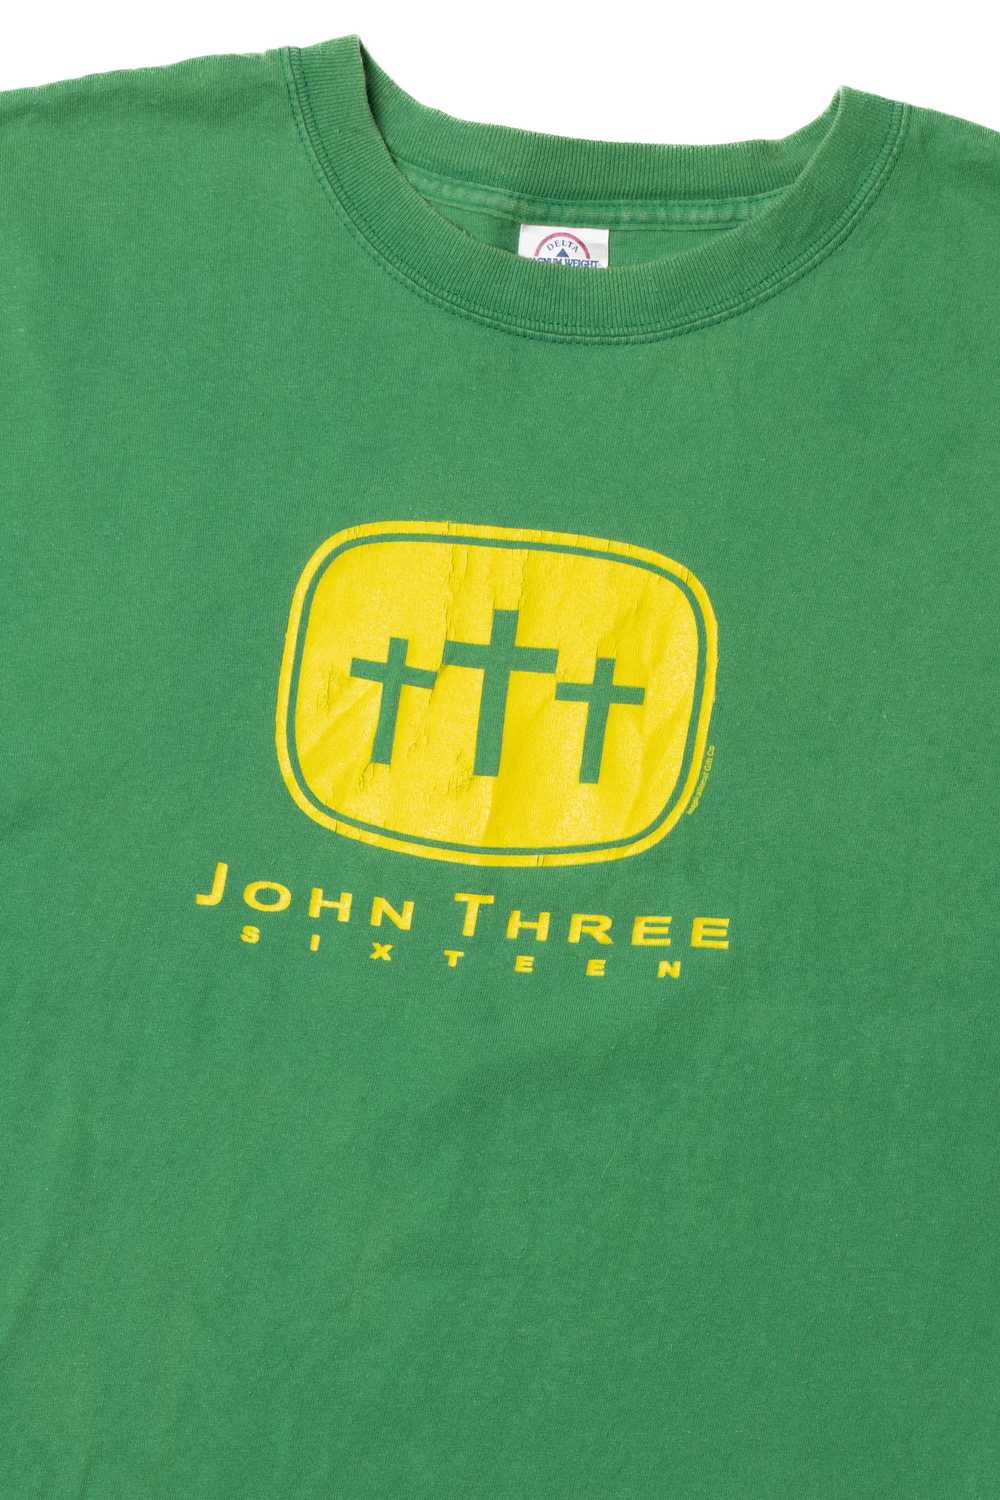 "John Three Sixteen" T-Shirt - image 2